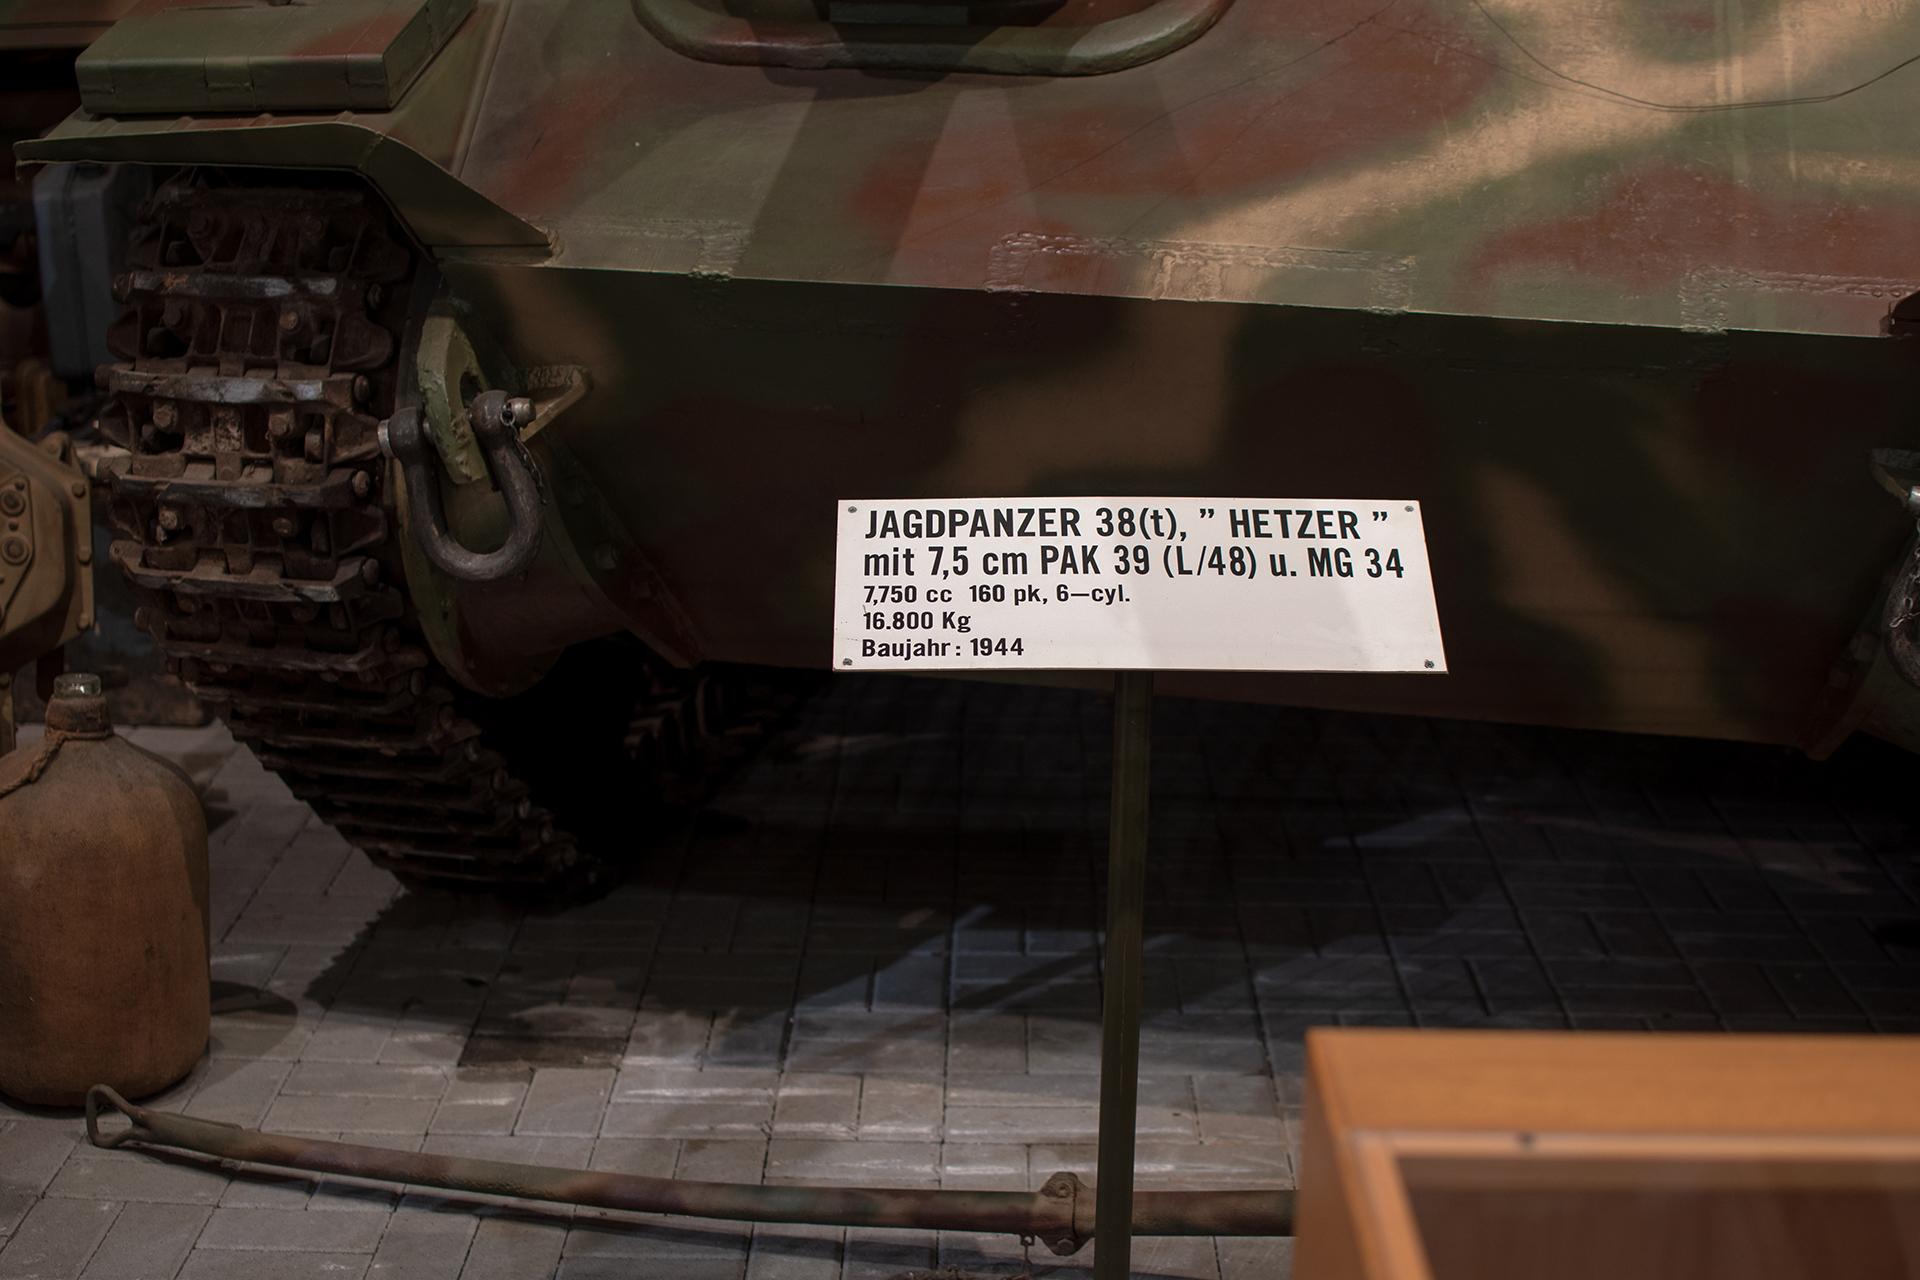 BMM Jagdpanzer 38t 1944 details - Musée National d'Histoire Militaire, Diekirch